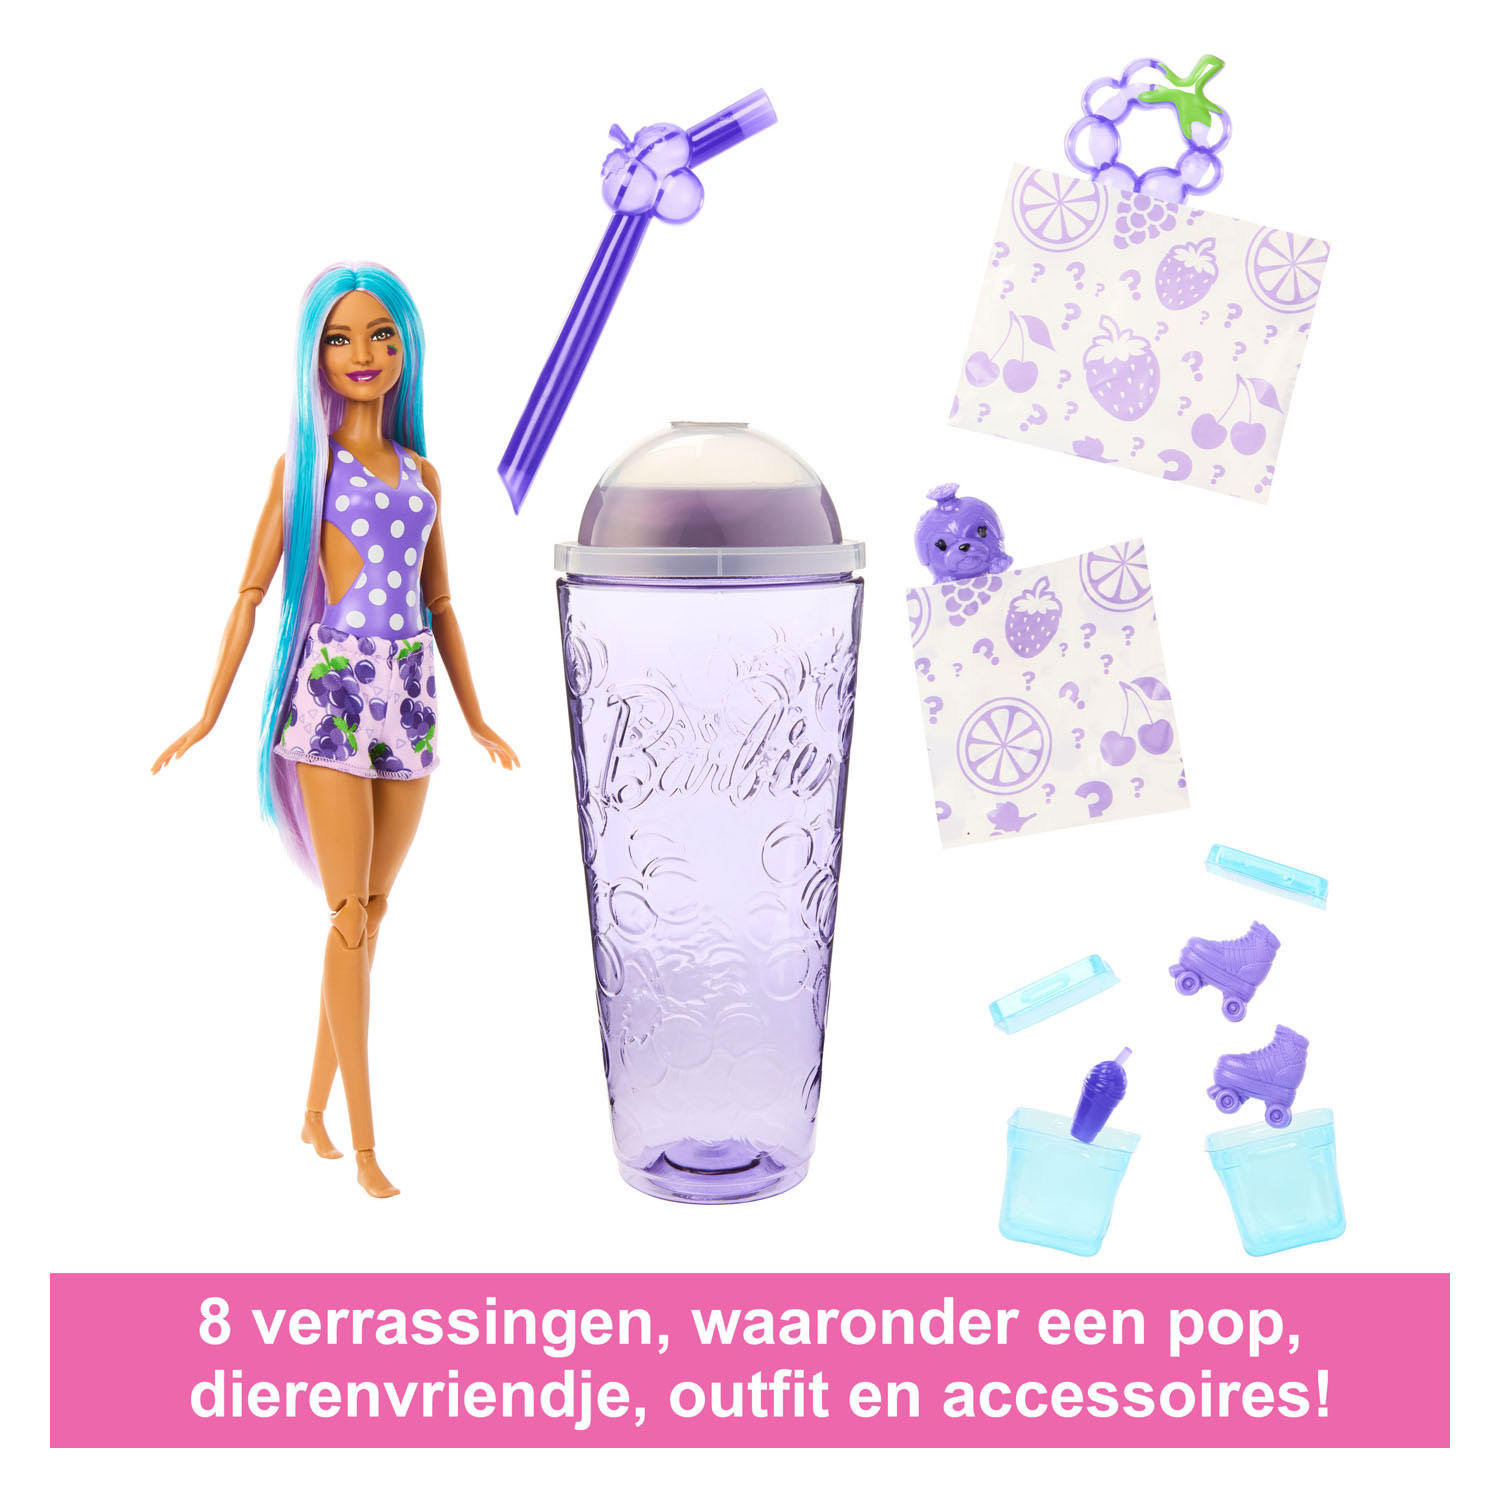 Barbie Reveal Doll Juicy Fruits Series – Grape Fizz